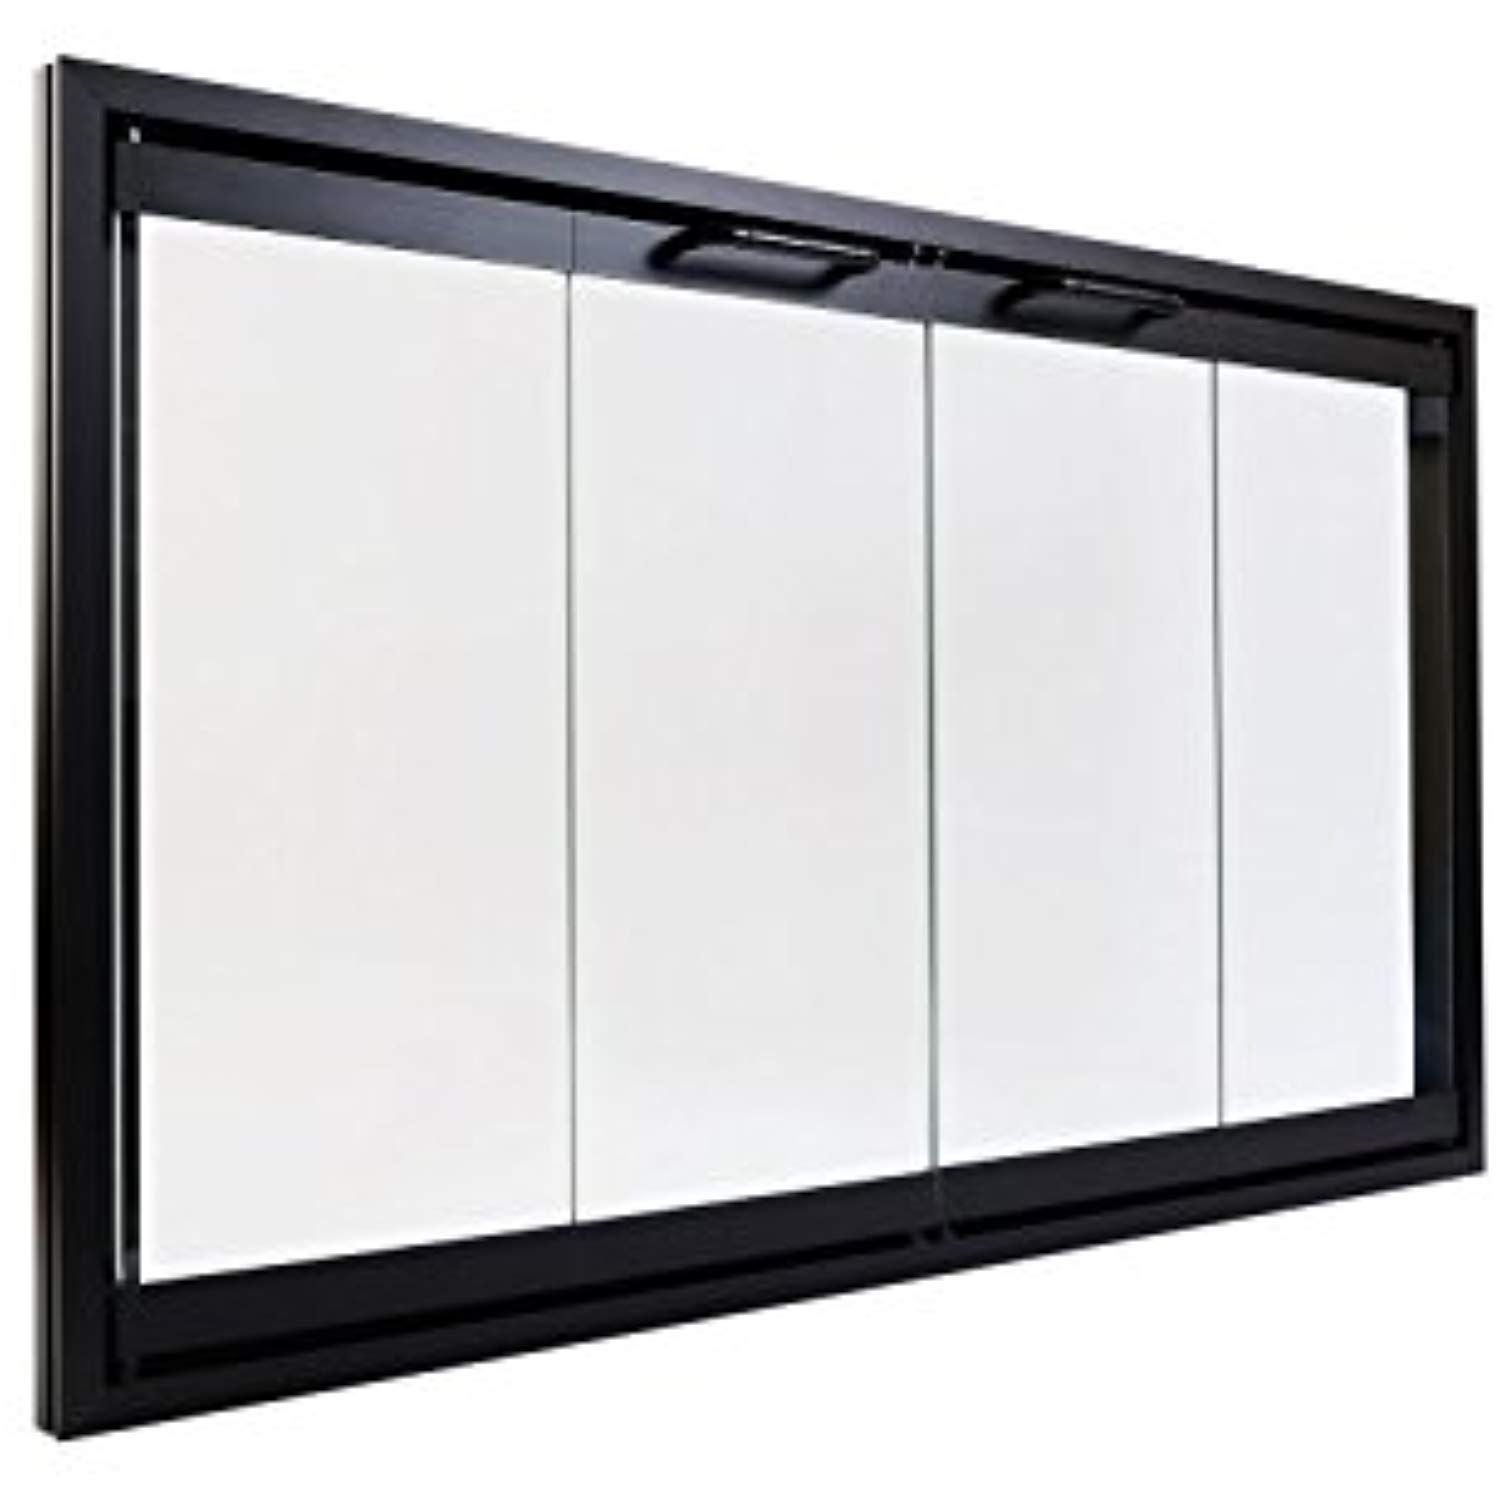 Fireplace Doors Amazon Fresh Superior Bi Fold Glass Fireplace Door Easy to Install Stop